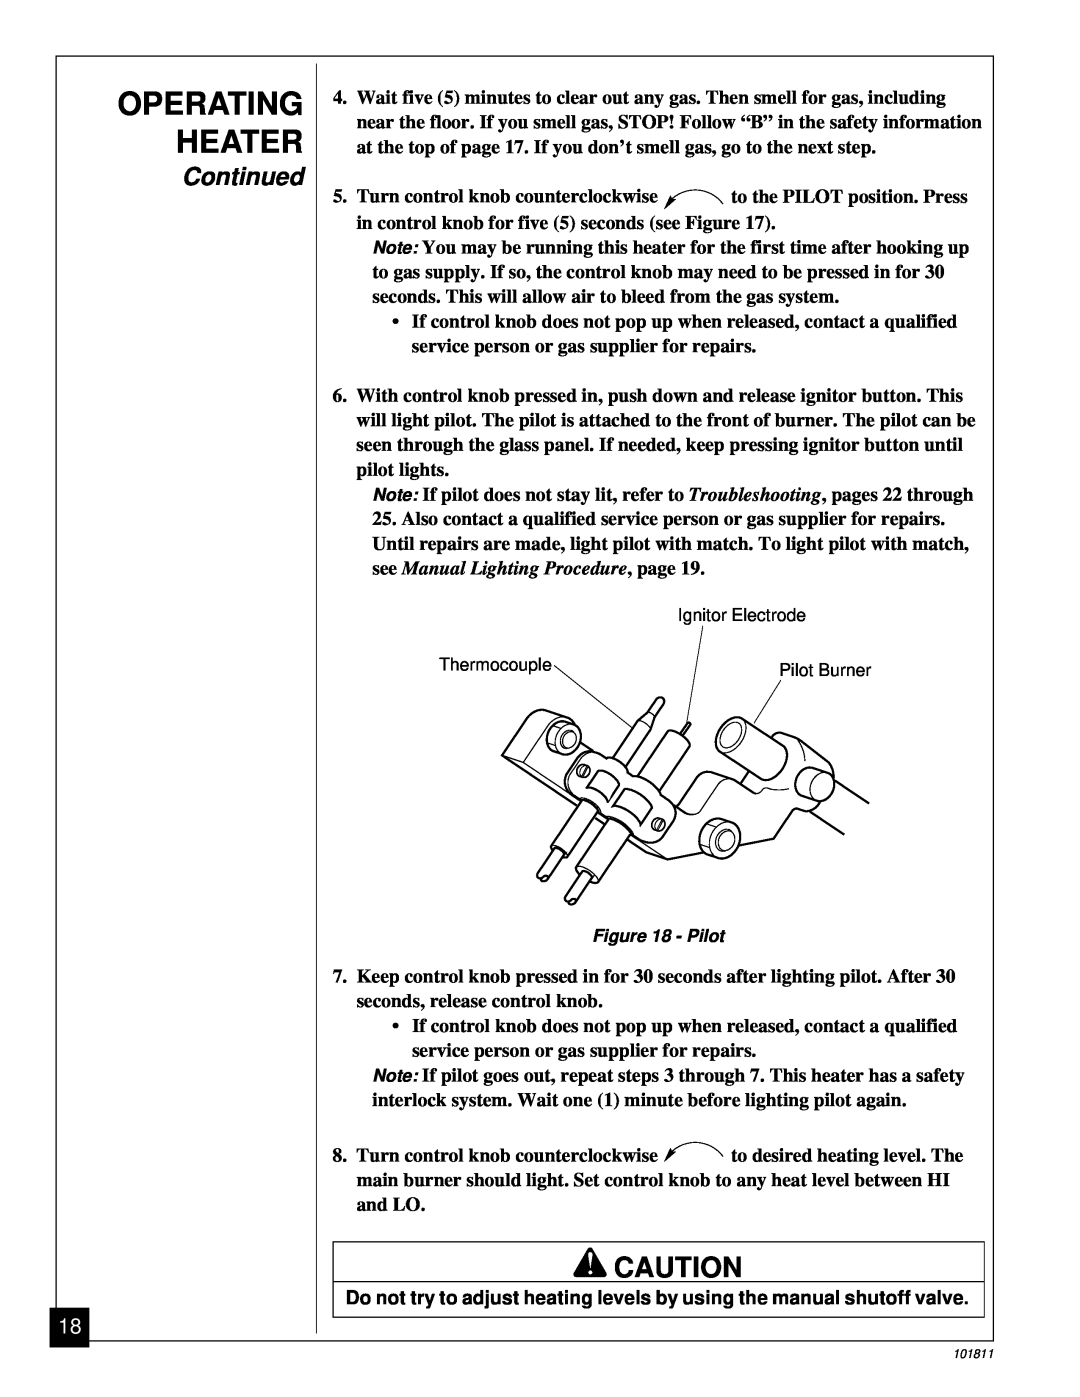 Desa 101811-01C.pdf installation manual Operating Heater, Continued, Pilot 